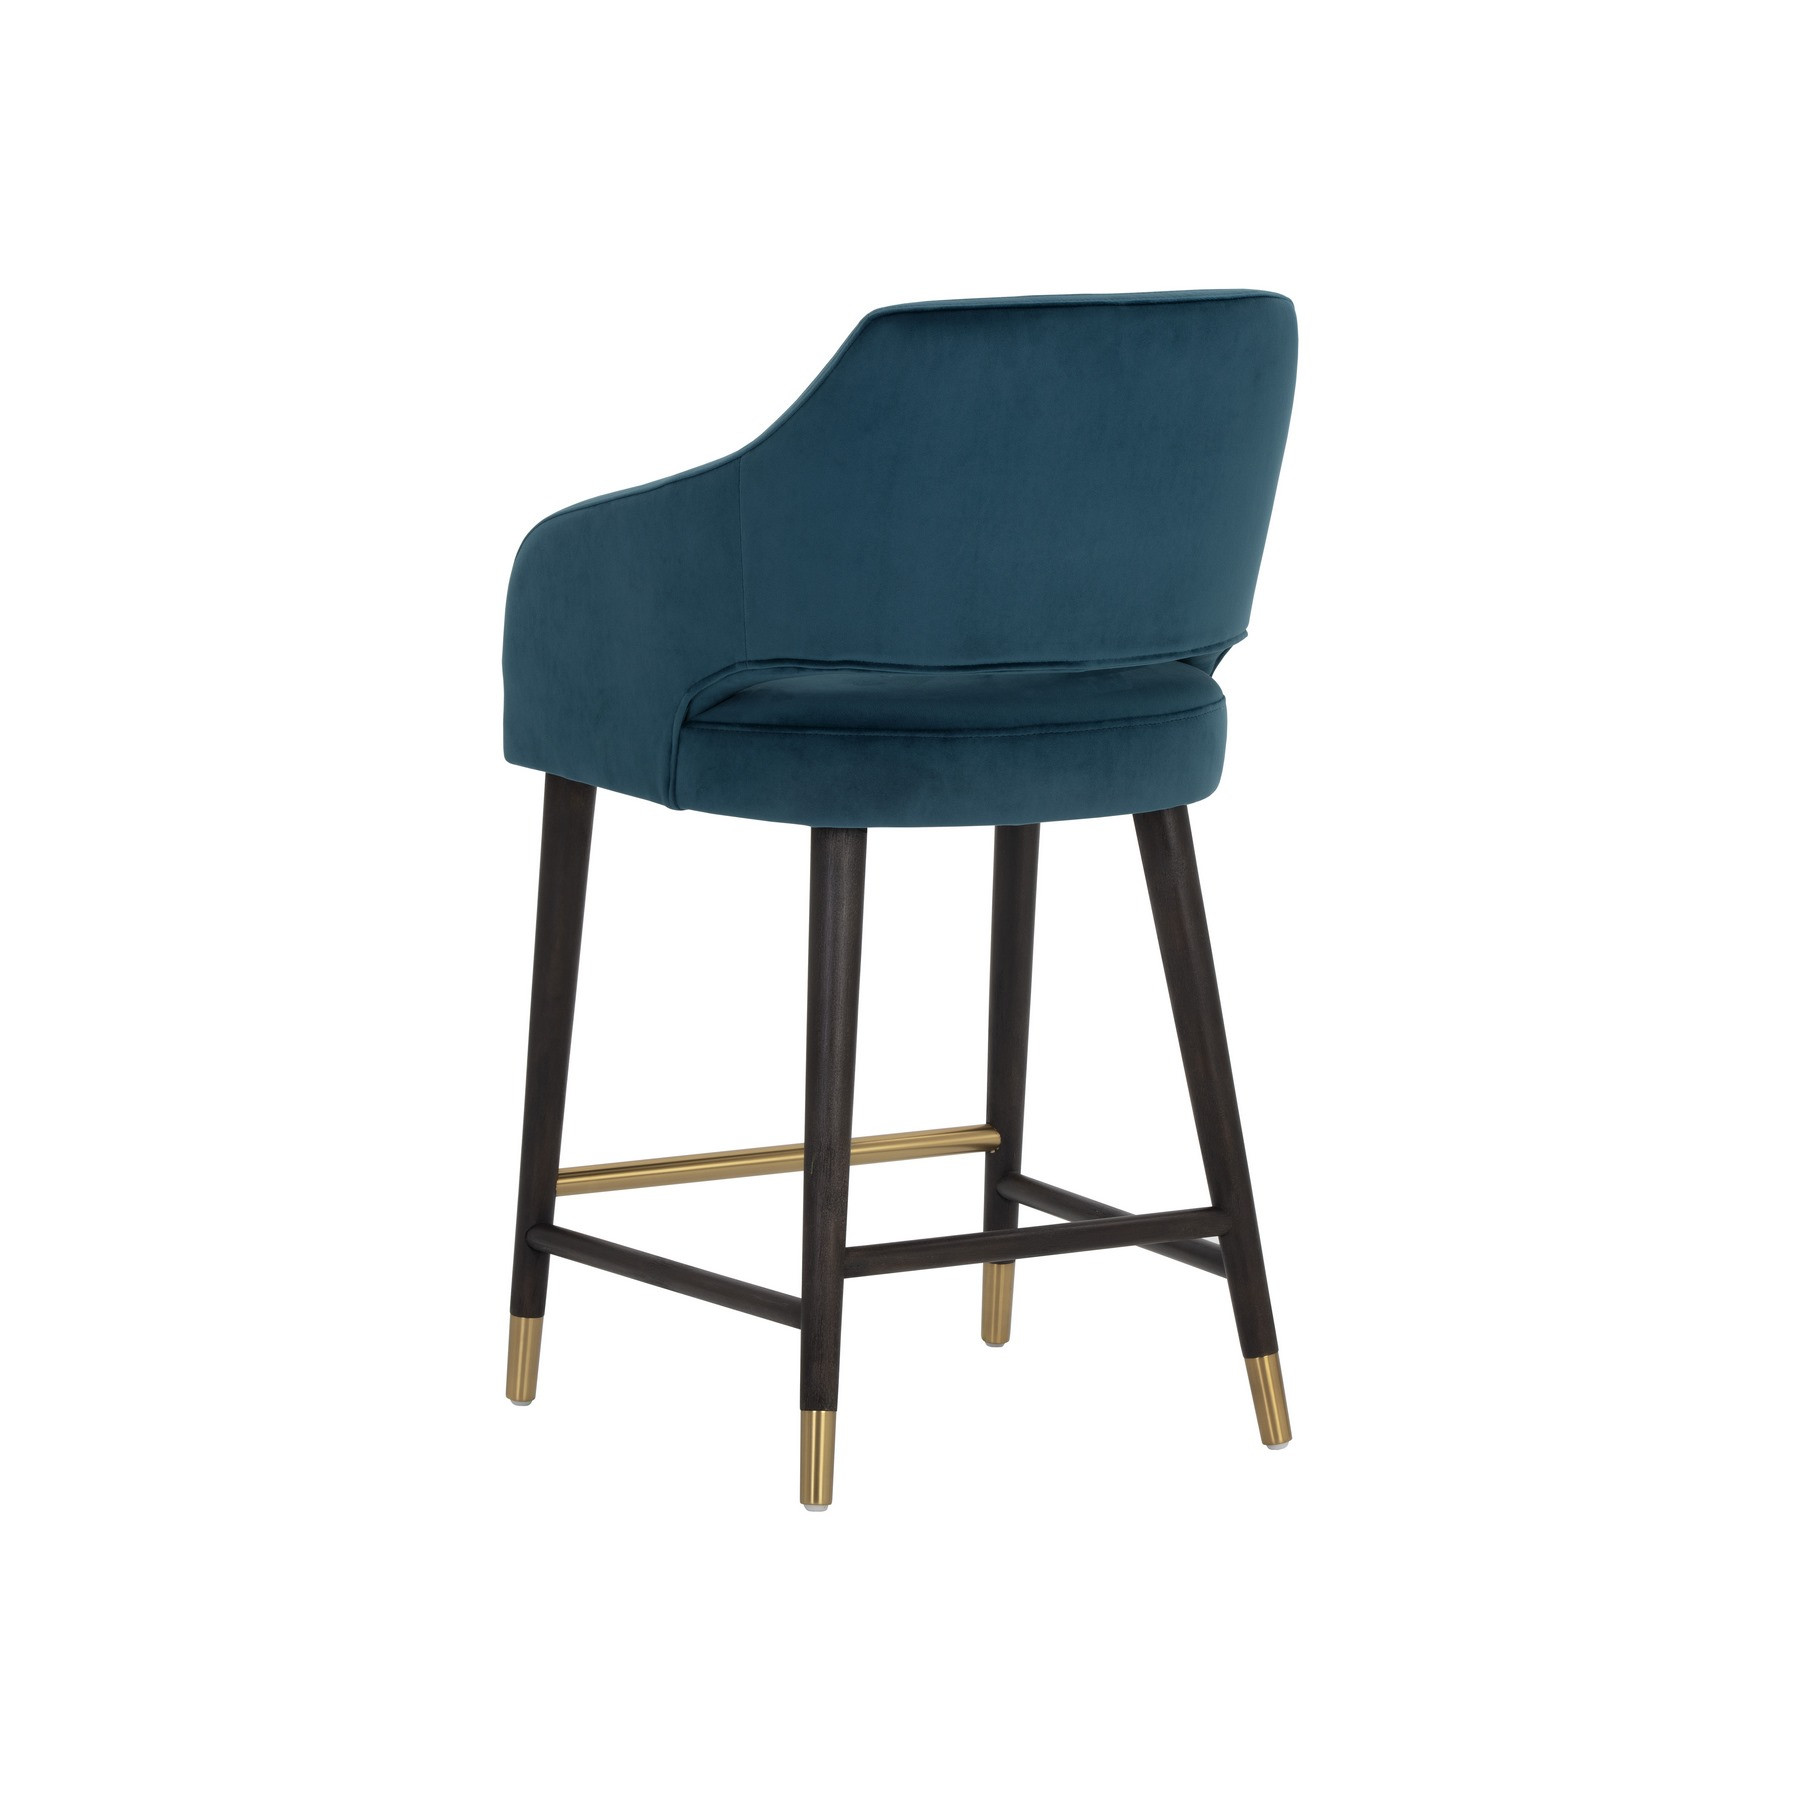 Adelaide Modern Timeless Teal Upholstered Counter Stool in Blue by Sunpan